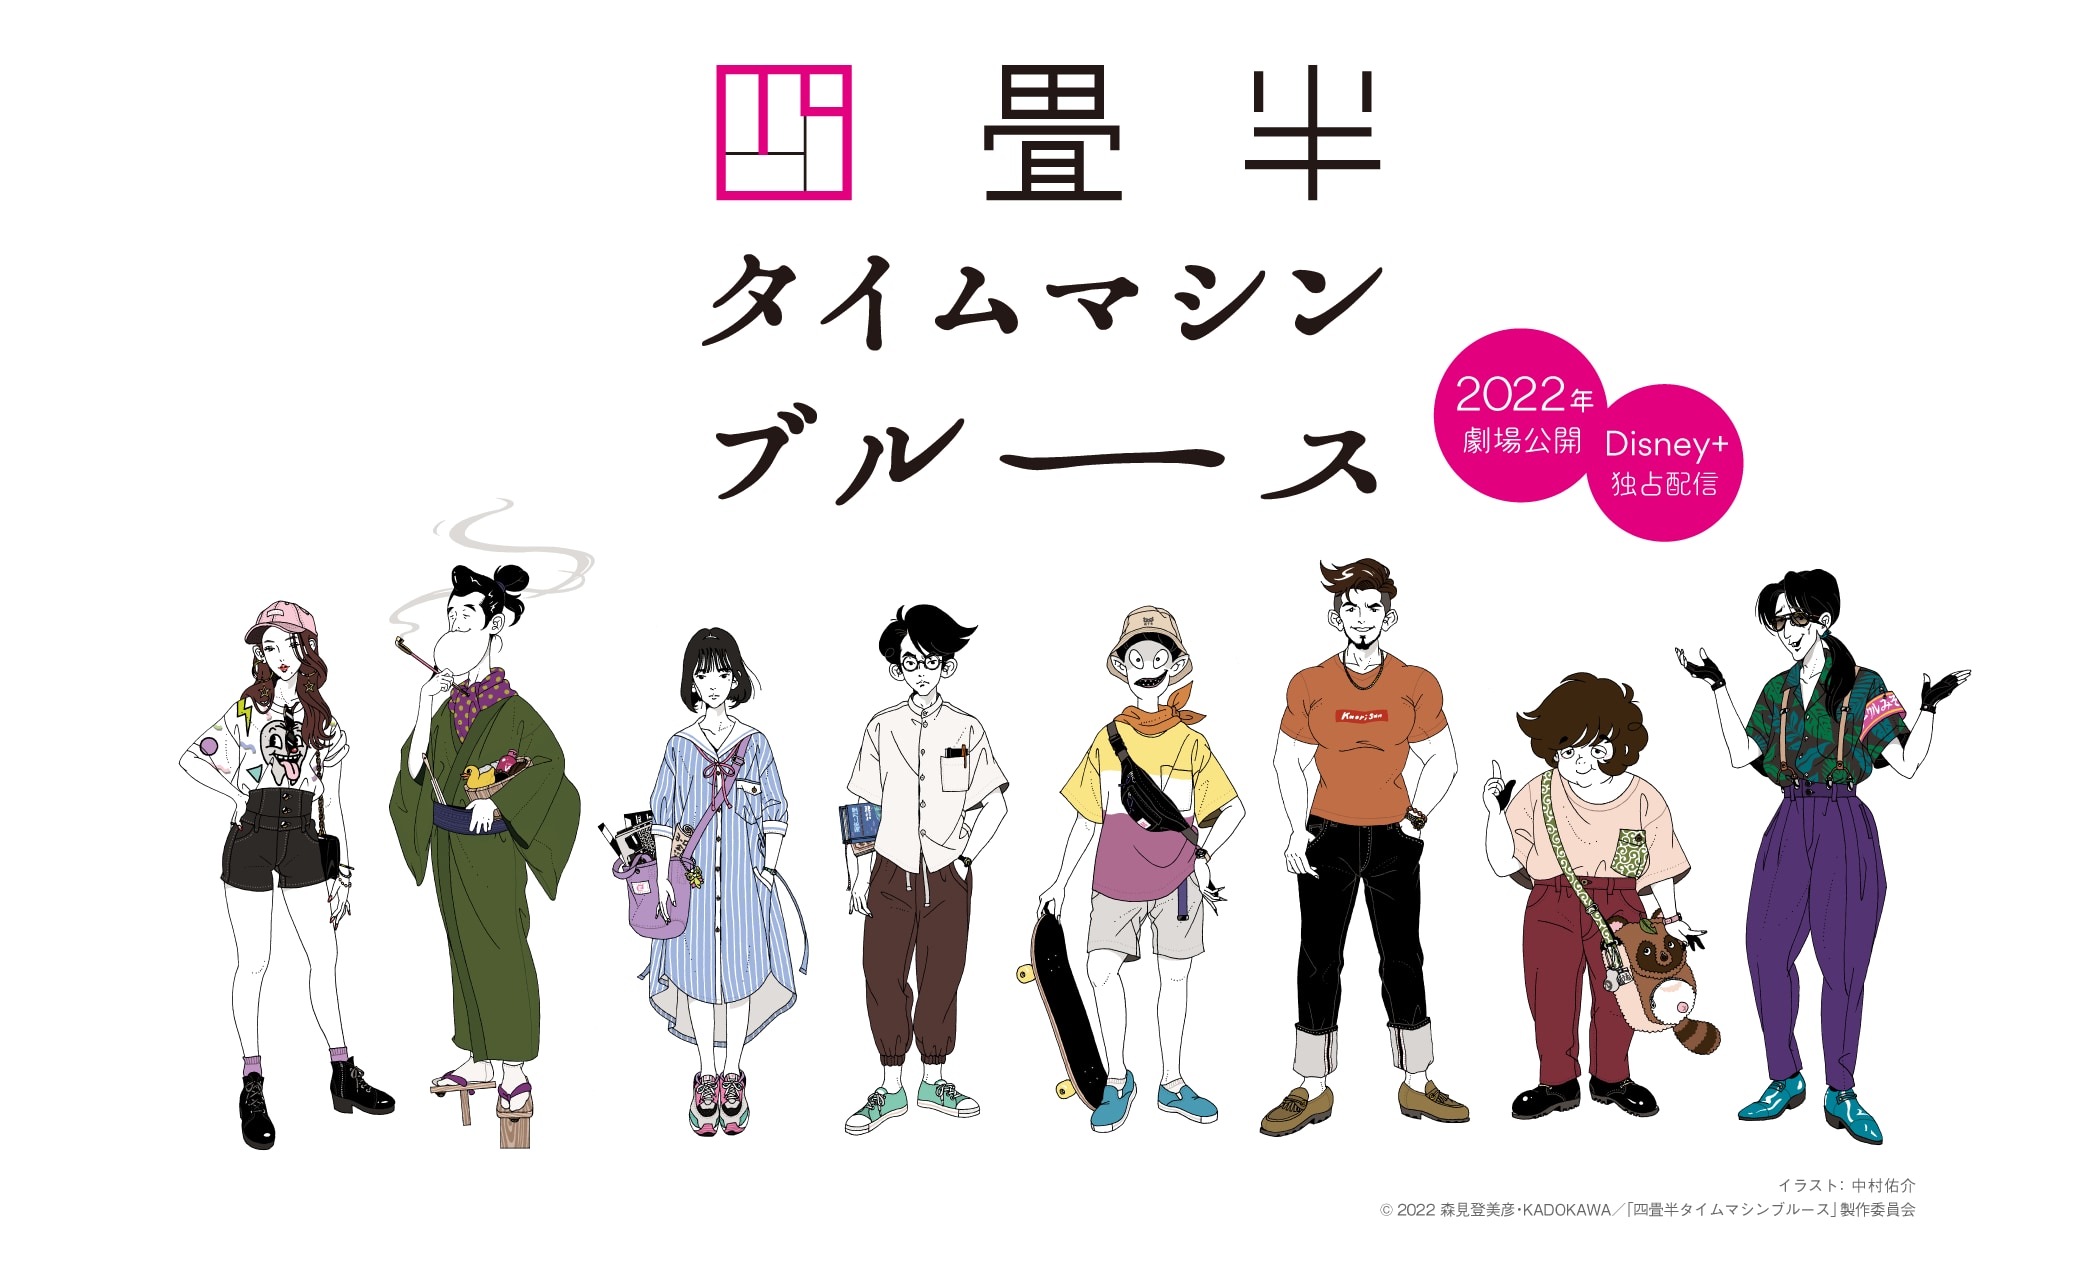 Yojohan-KV Anime Movie "Yojohan Time Machine Blues" Reveals Cast and Visual, Coming to Theaters and Disney+ in 2022